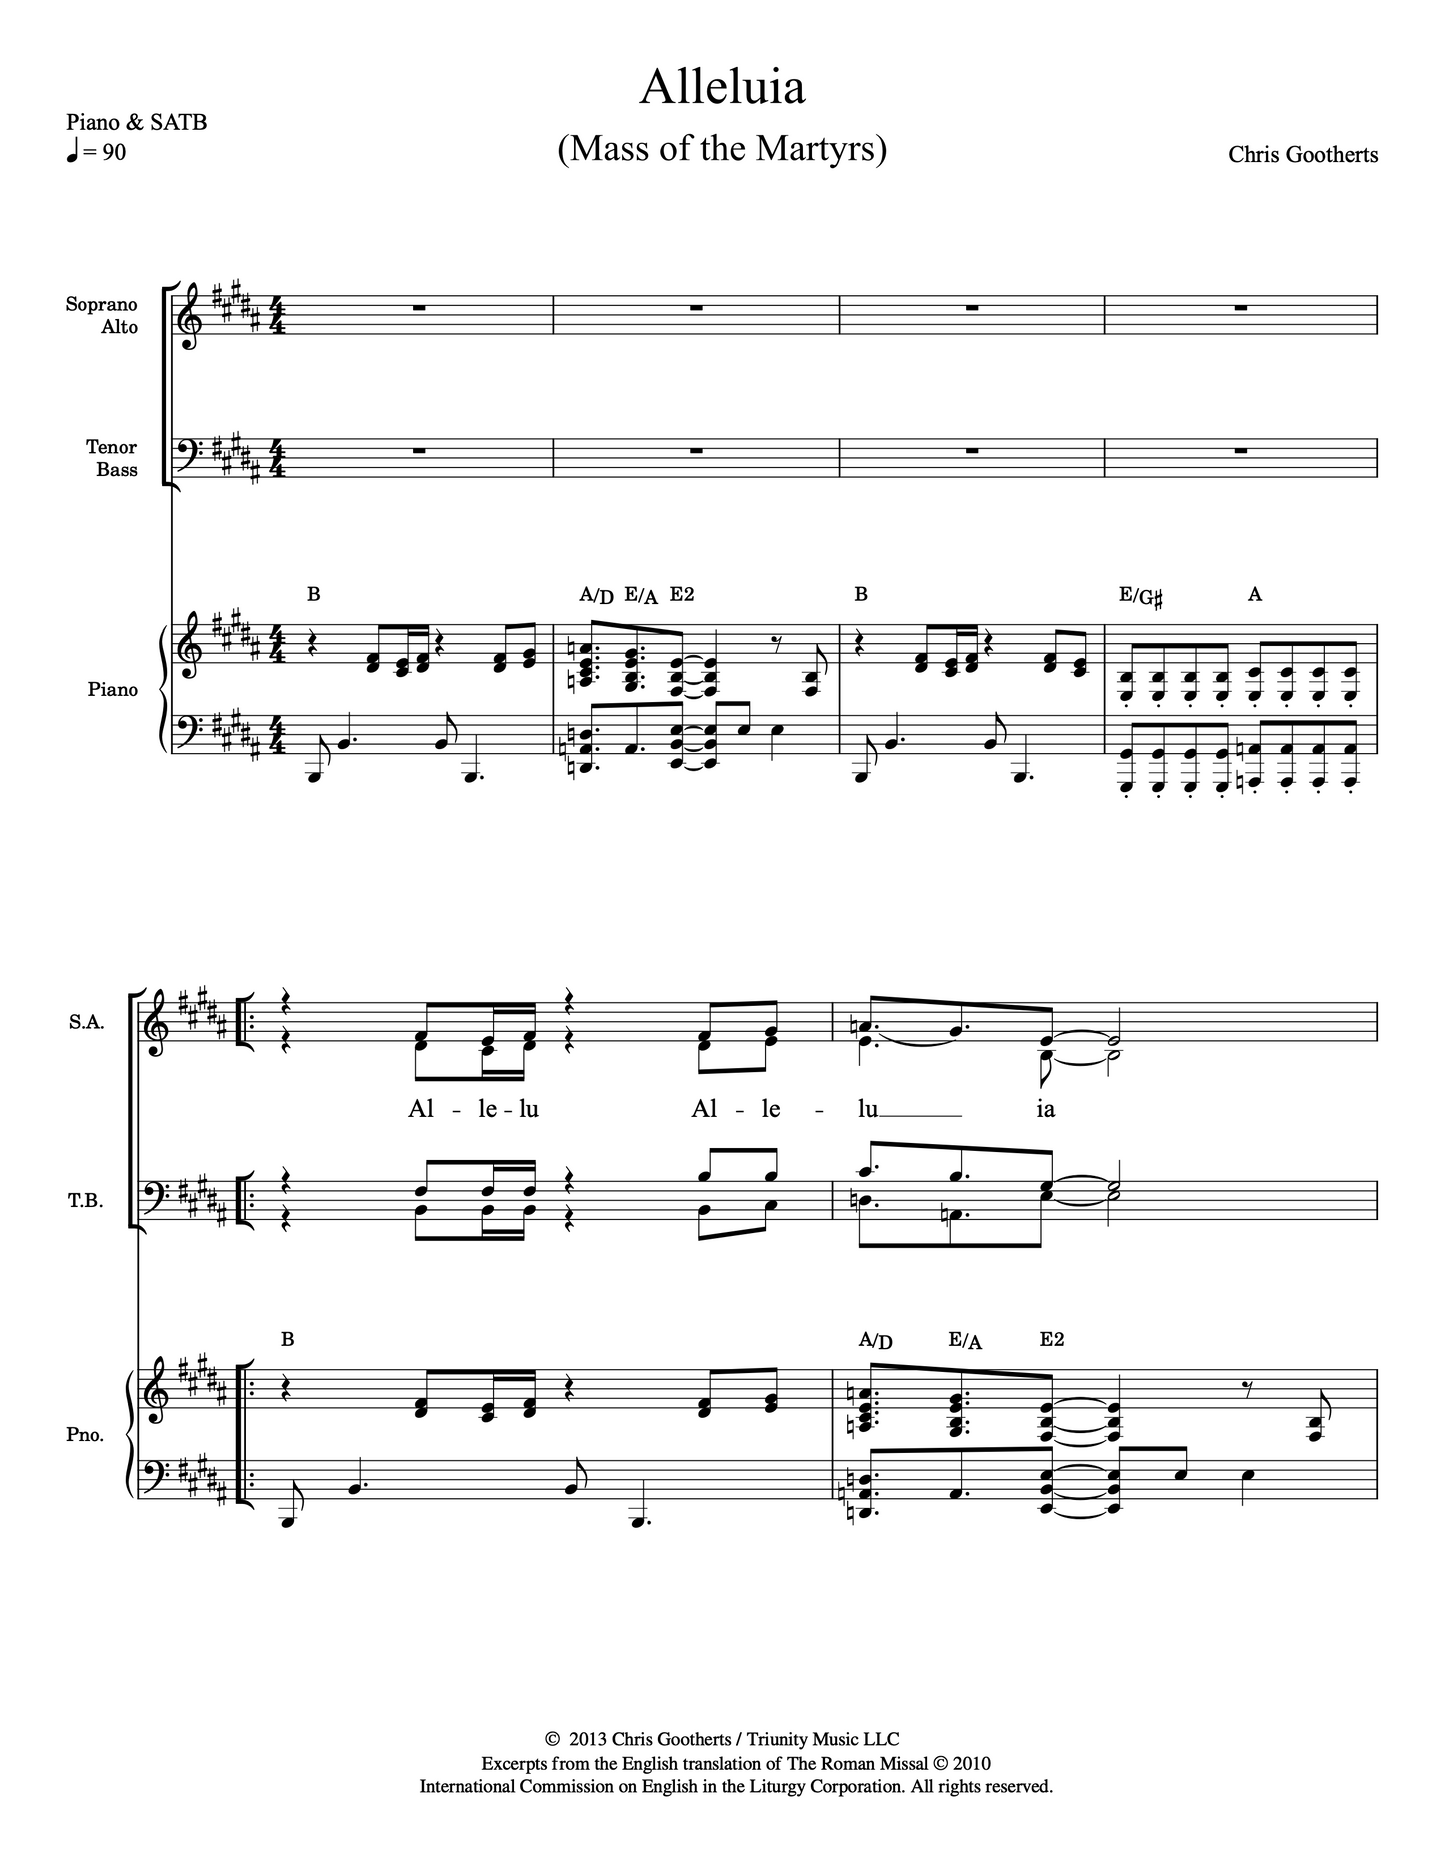 Alleluia - Gradual (SATB & Piano)